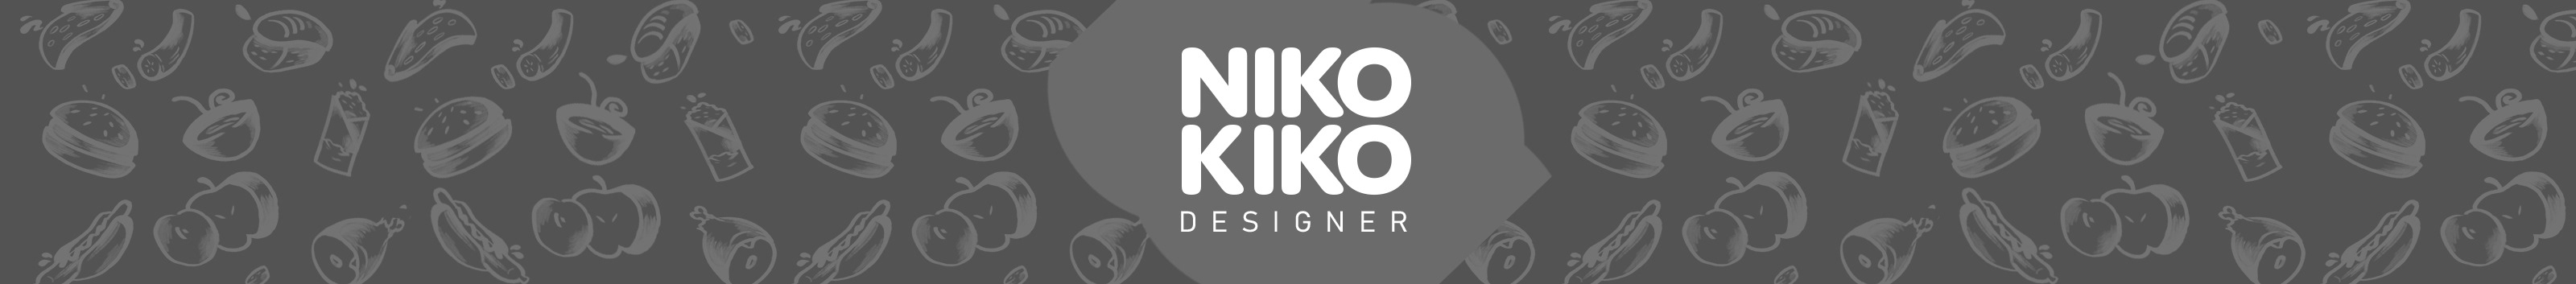 Nikola Krstic's profile banner